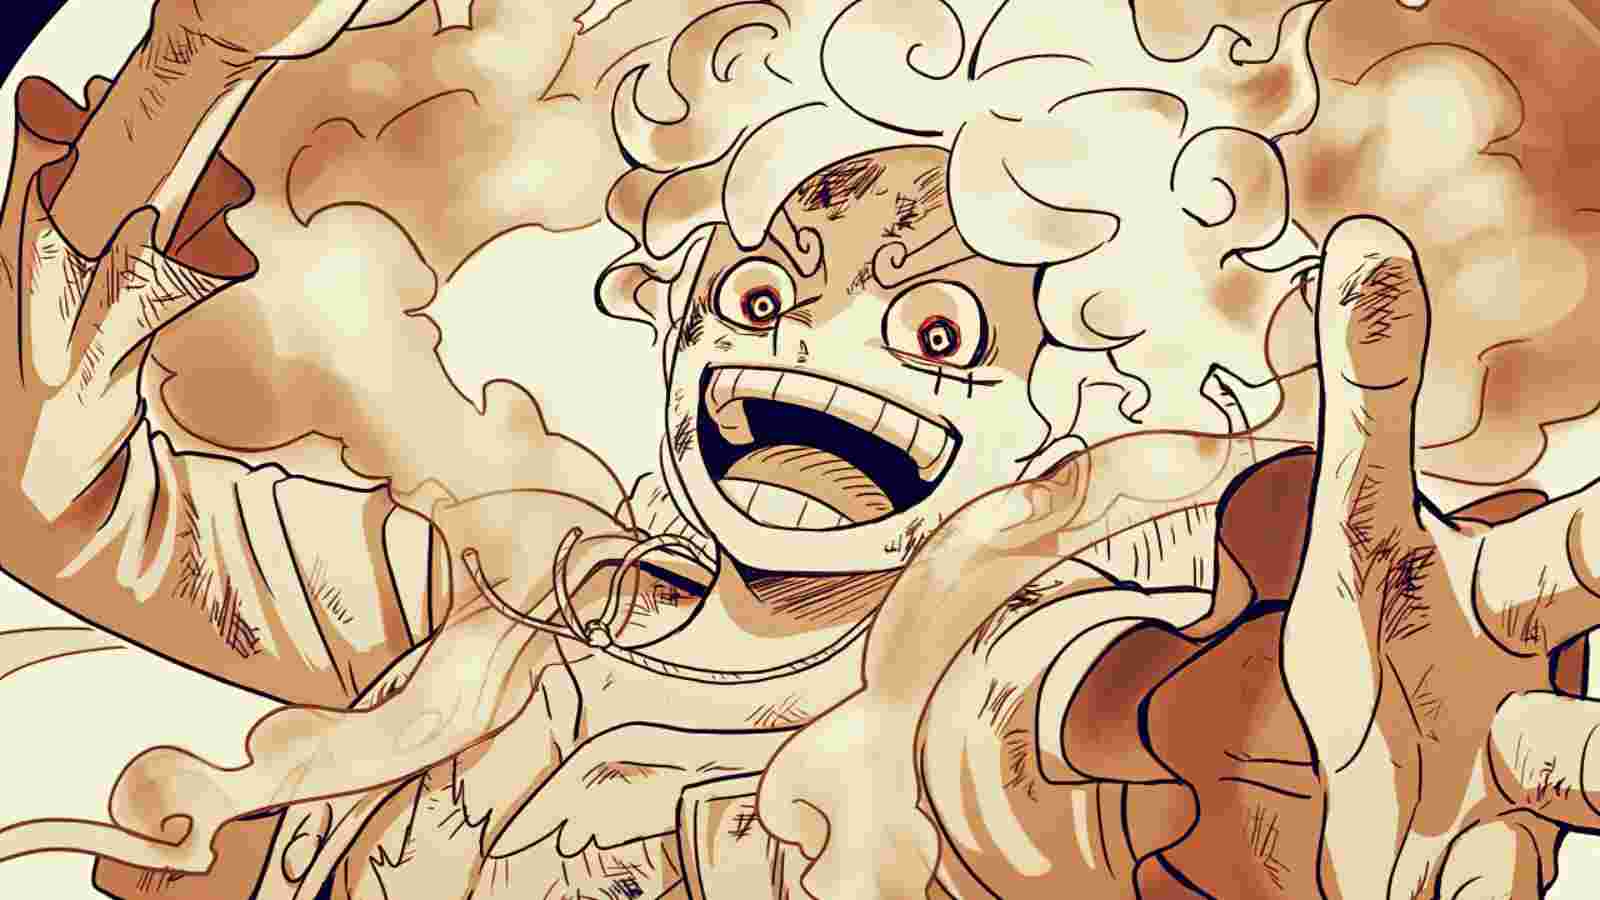 𝐀 𝐖 𝐀 𝐊 𝐄 𝐍 𝐈 𝐍 𝐆 (One Piece Gear 5 transformation) 